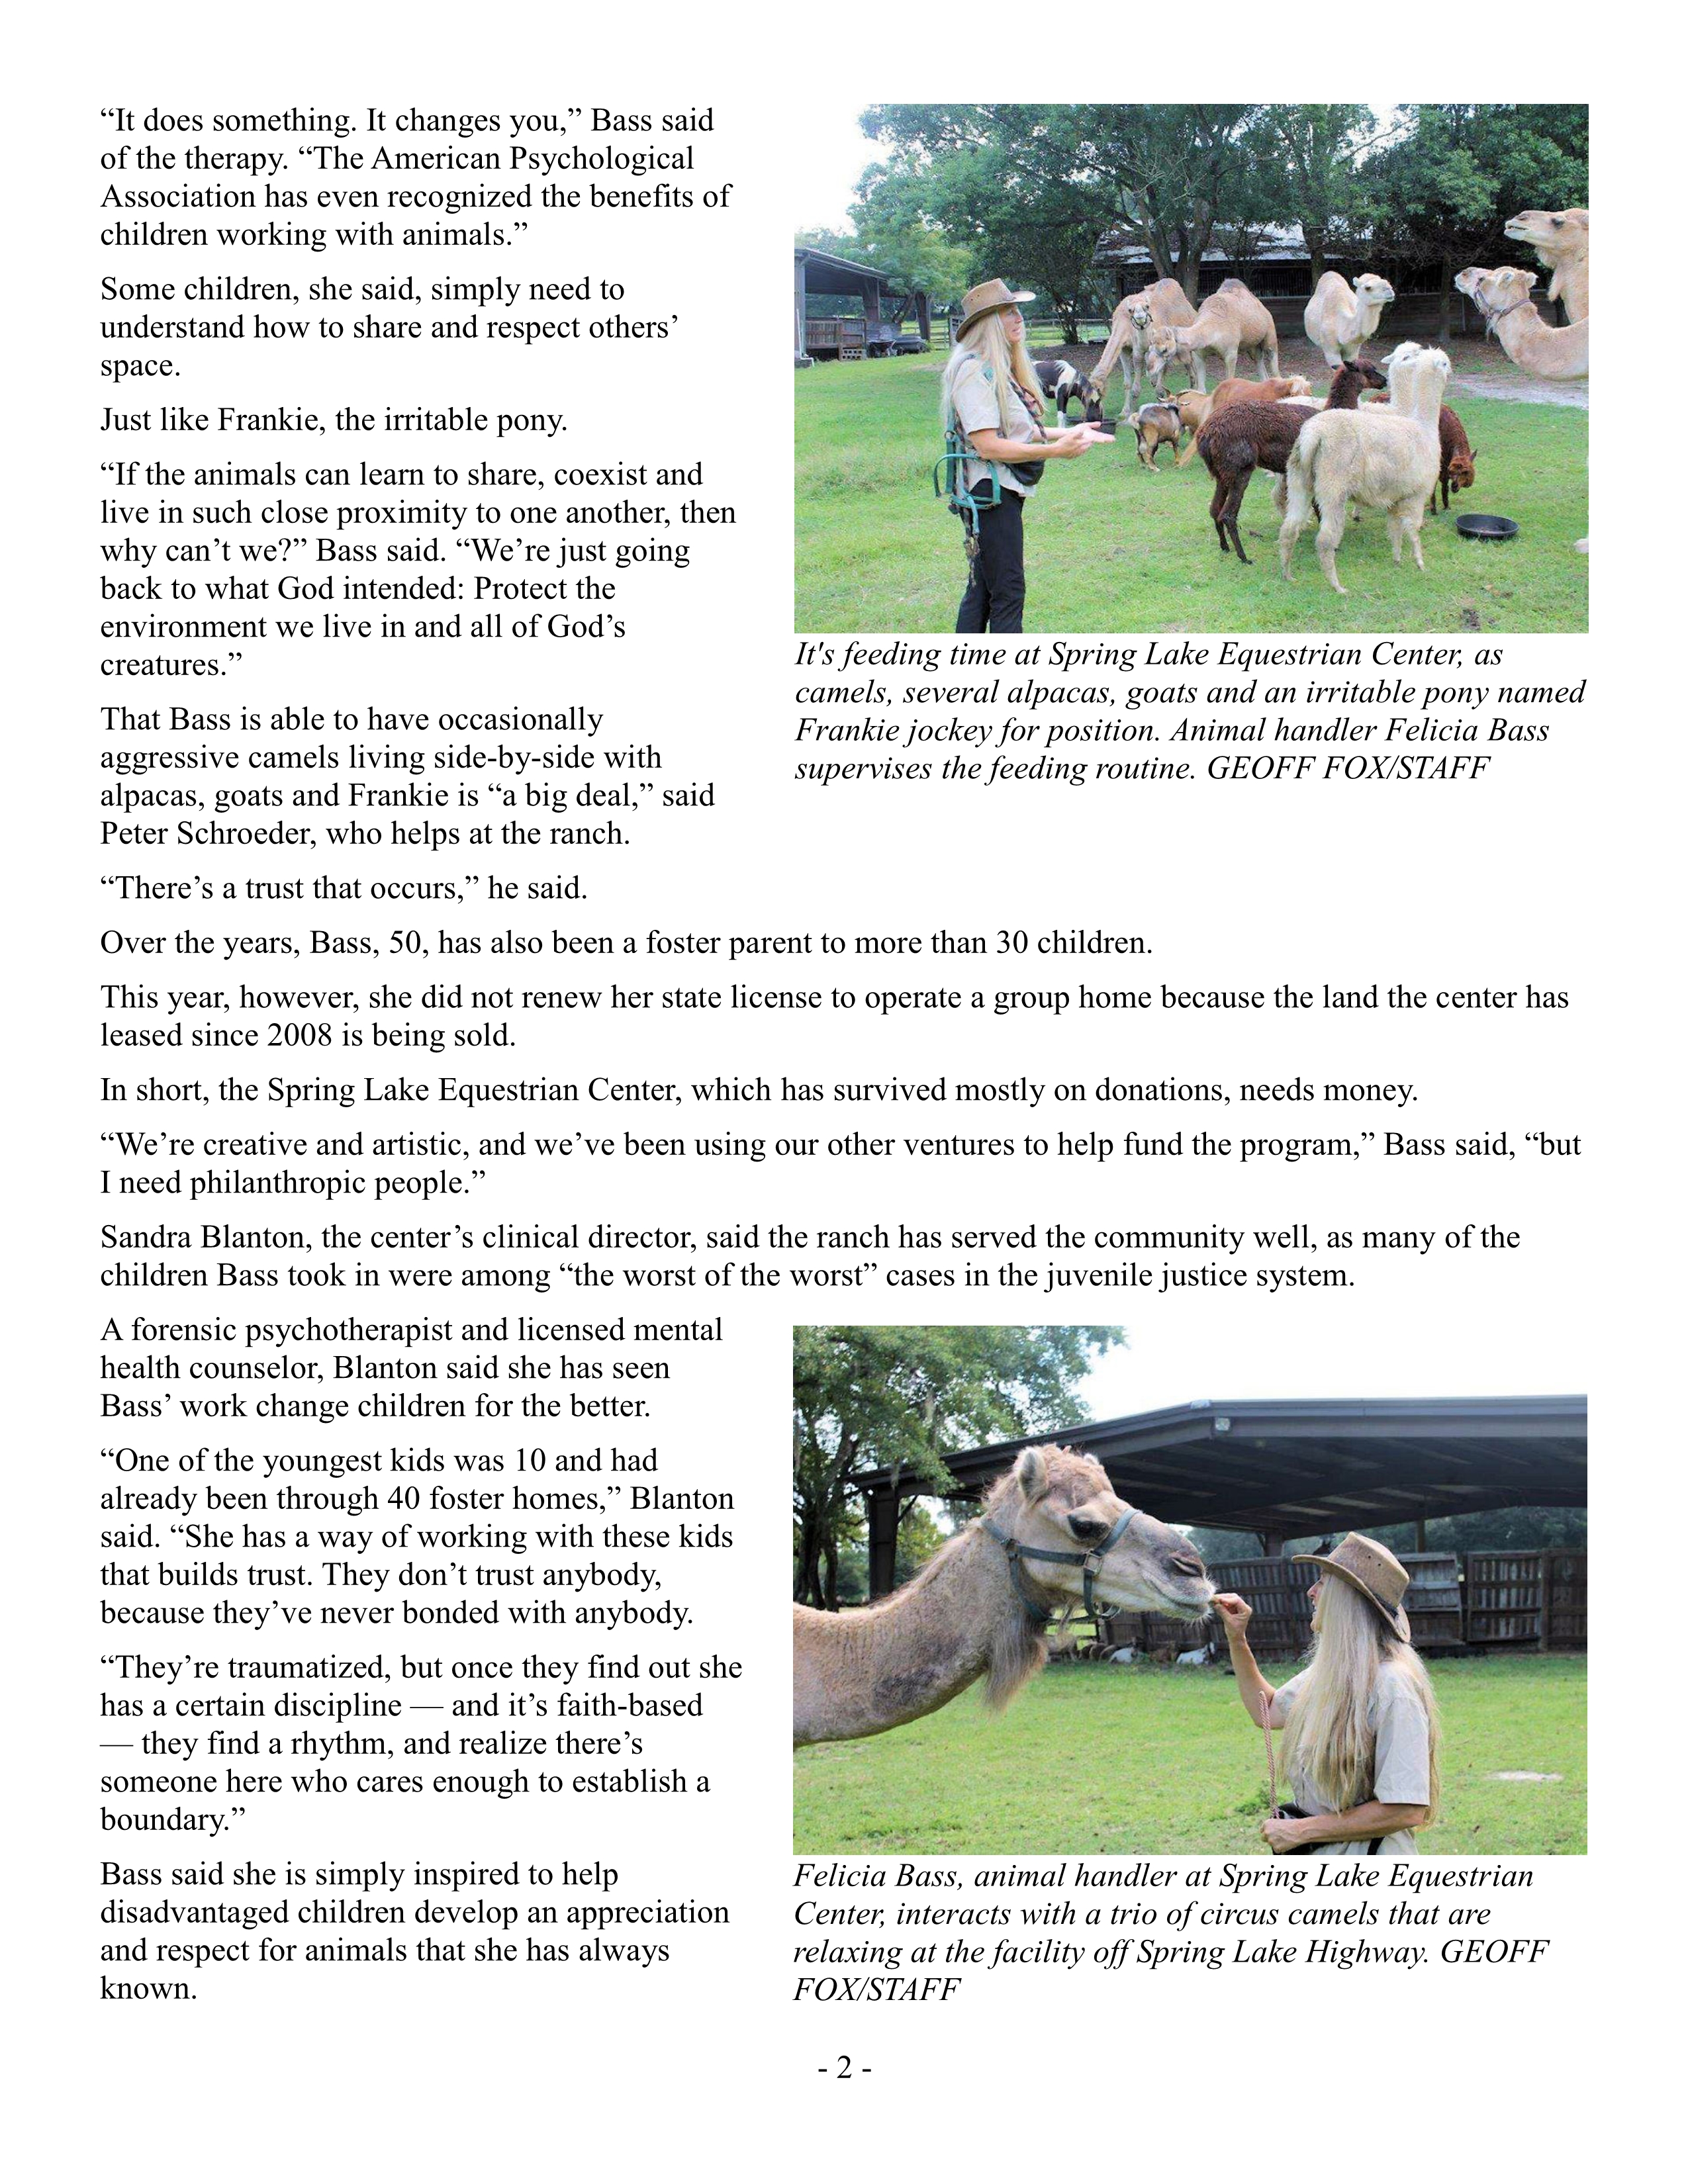 Spring Lake woman rescues camels, horses, wayward teens 09-04-2014 Pg2